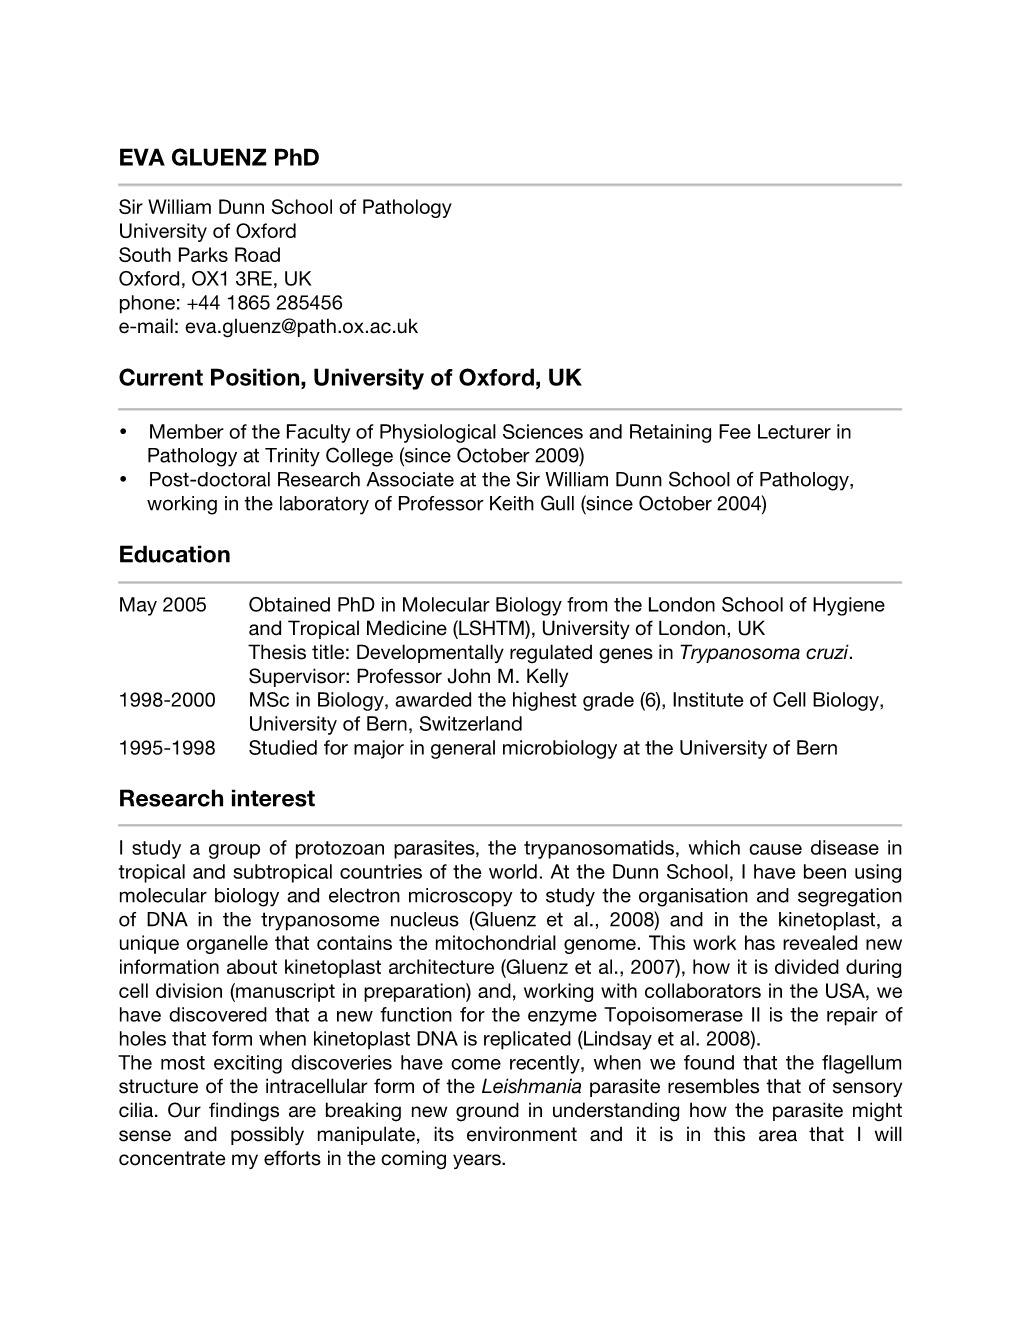 EVA GLUENZ Phd Current Position, University of Oxford, UK Education